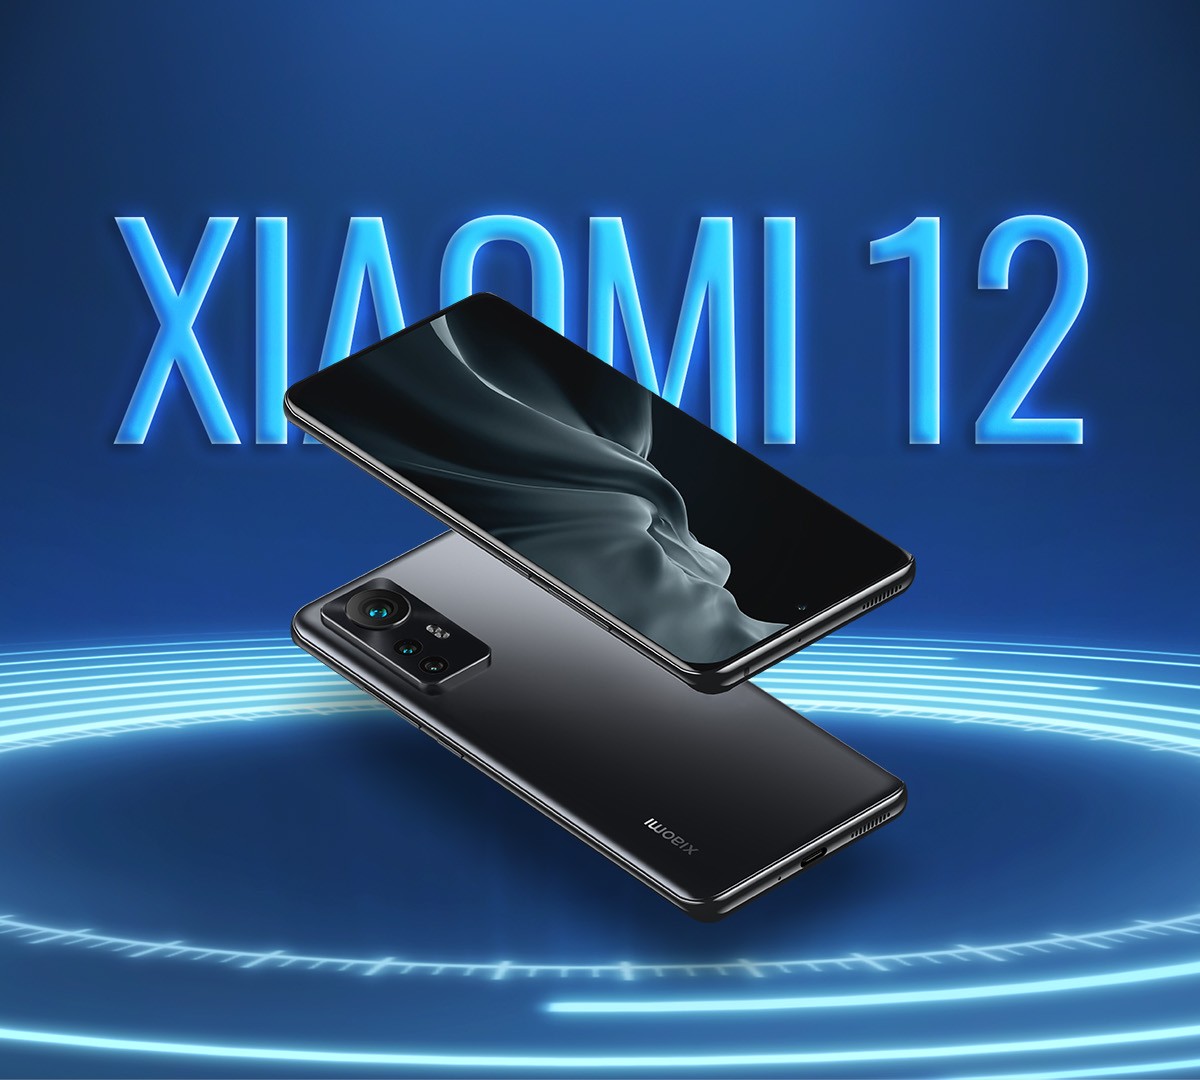 Lançamento Mundial】Versão Global Xiaomi 11T Pro 128/256GB